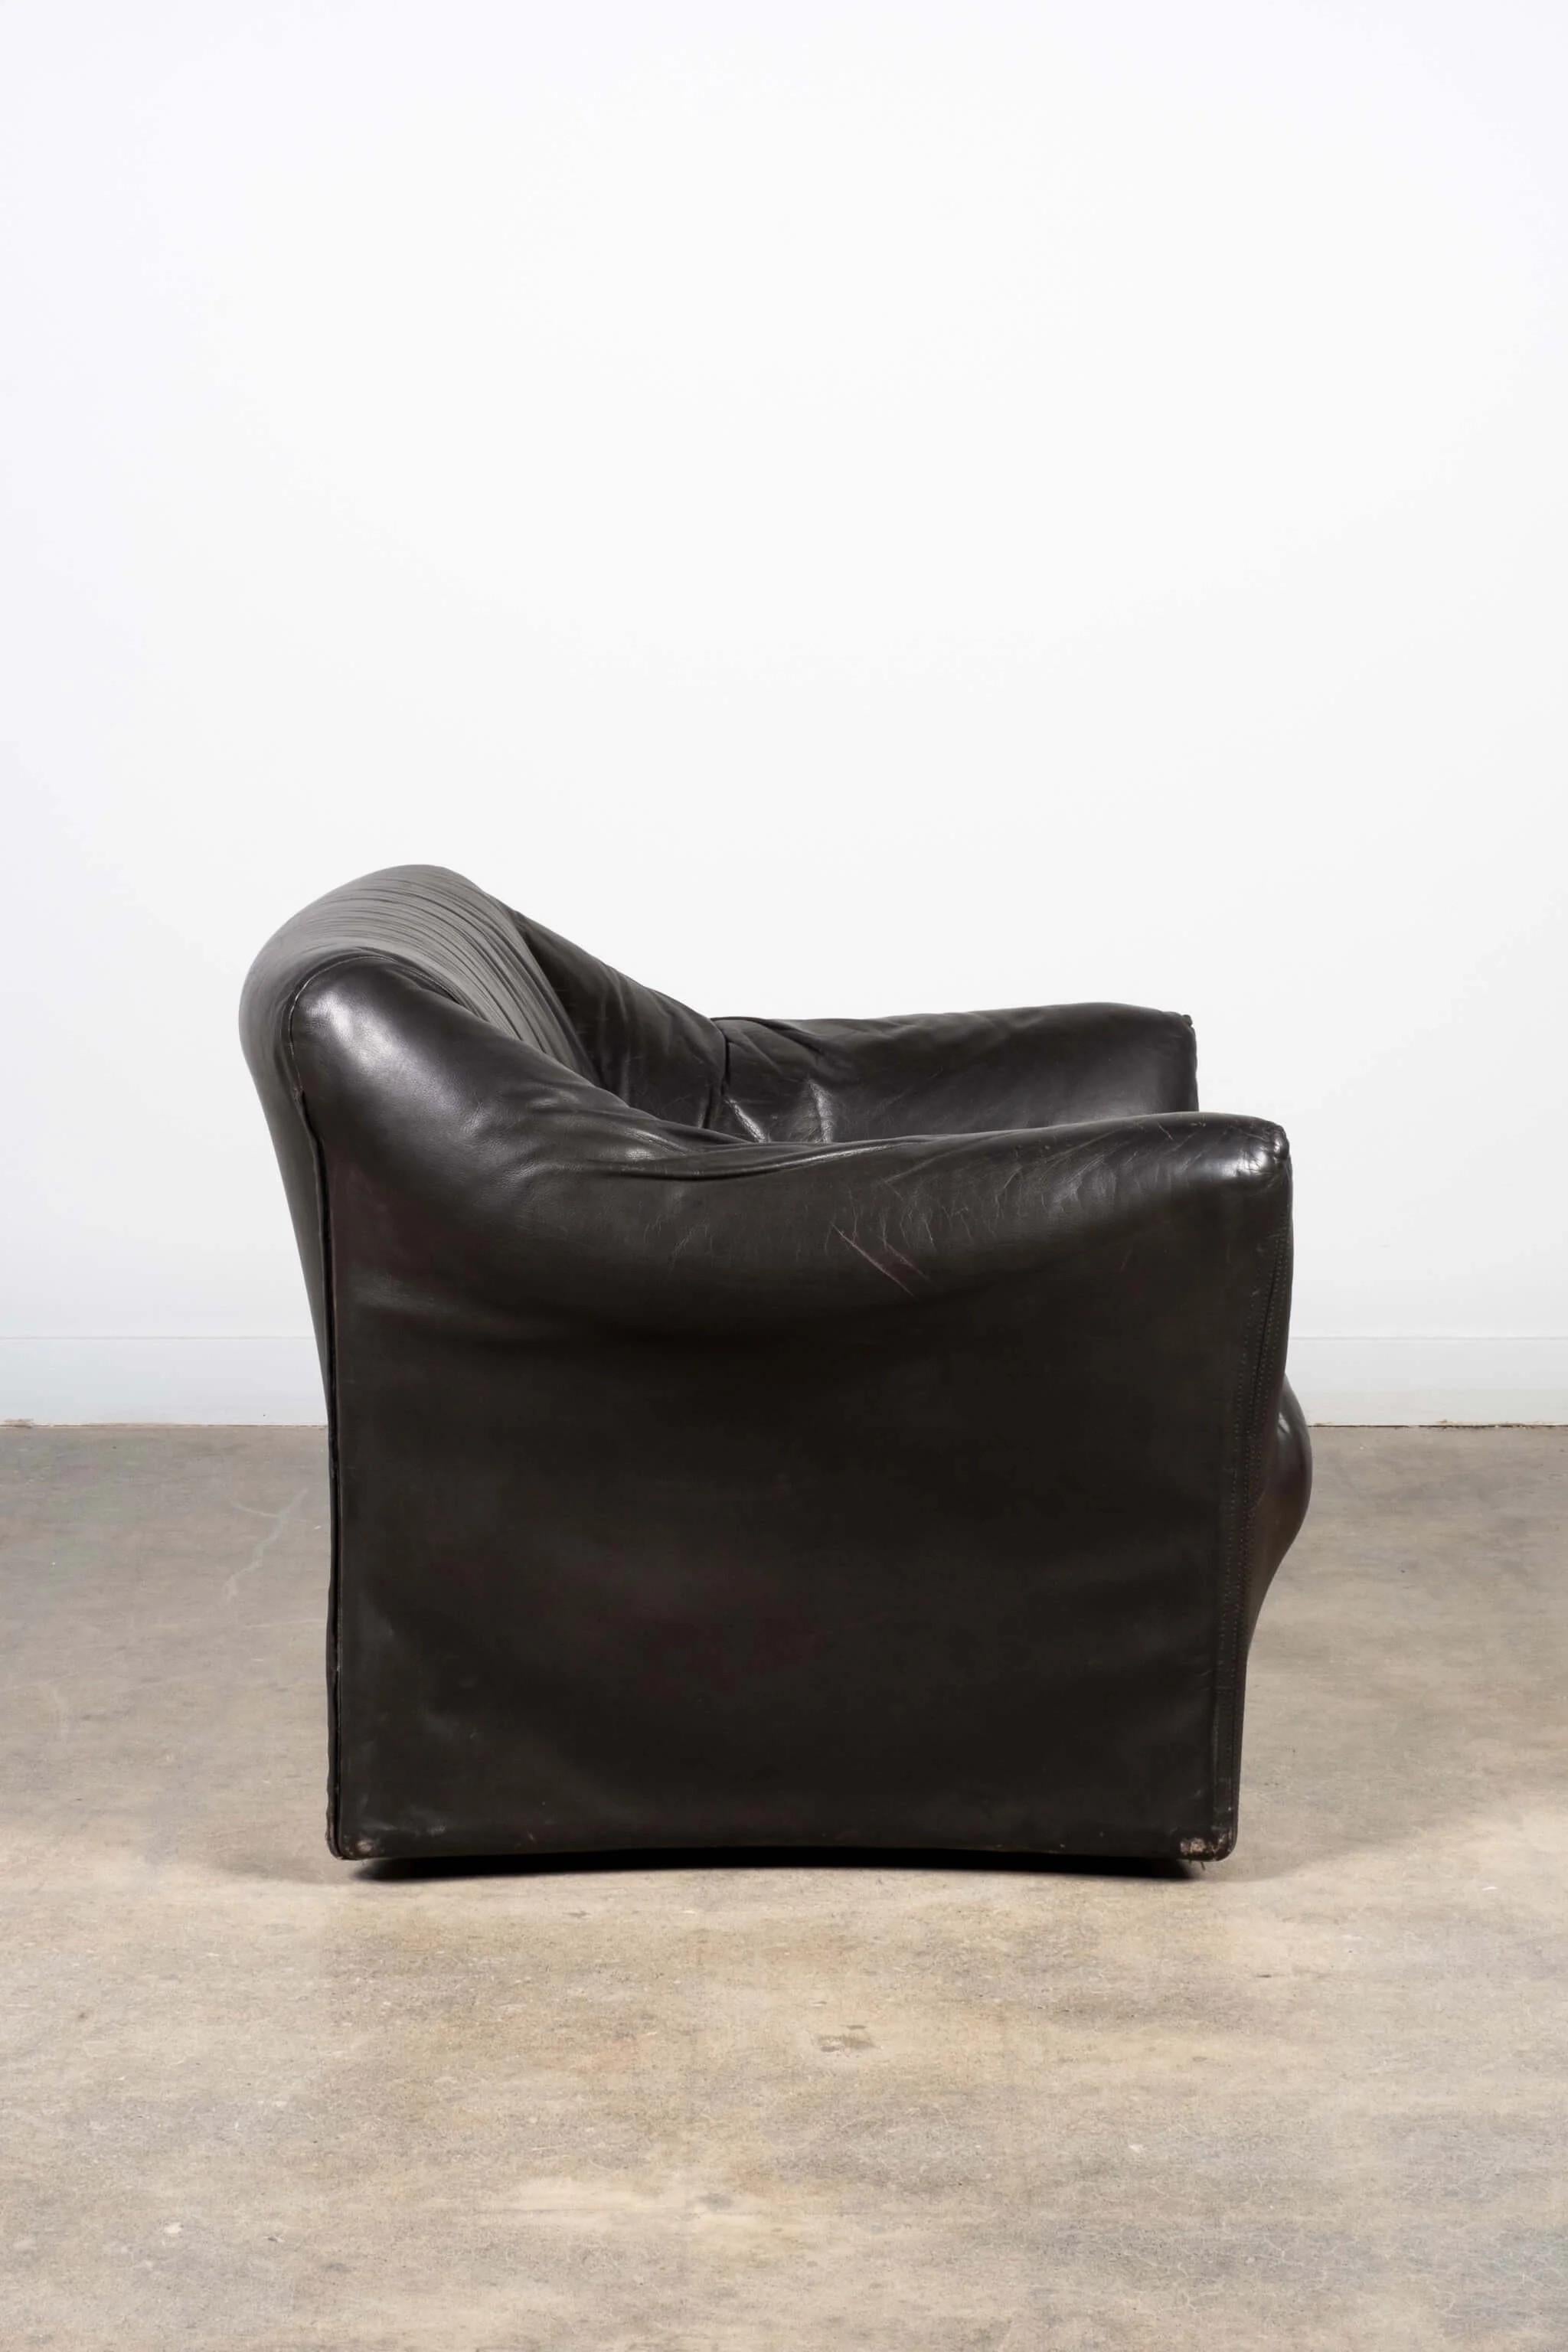 Model 685 'Tentazione' Armchair by Mario Bellini for Cassina In Good Condition For Sale In Toronto, CA